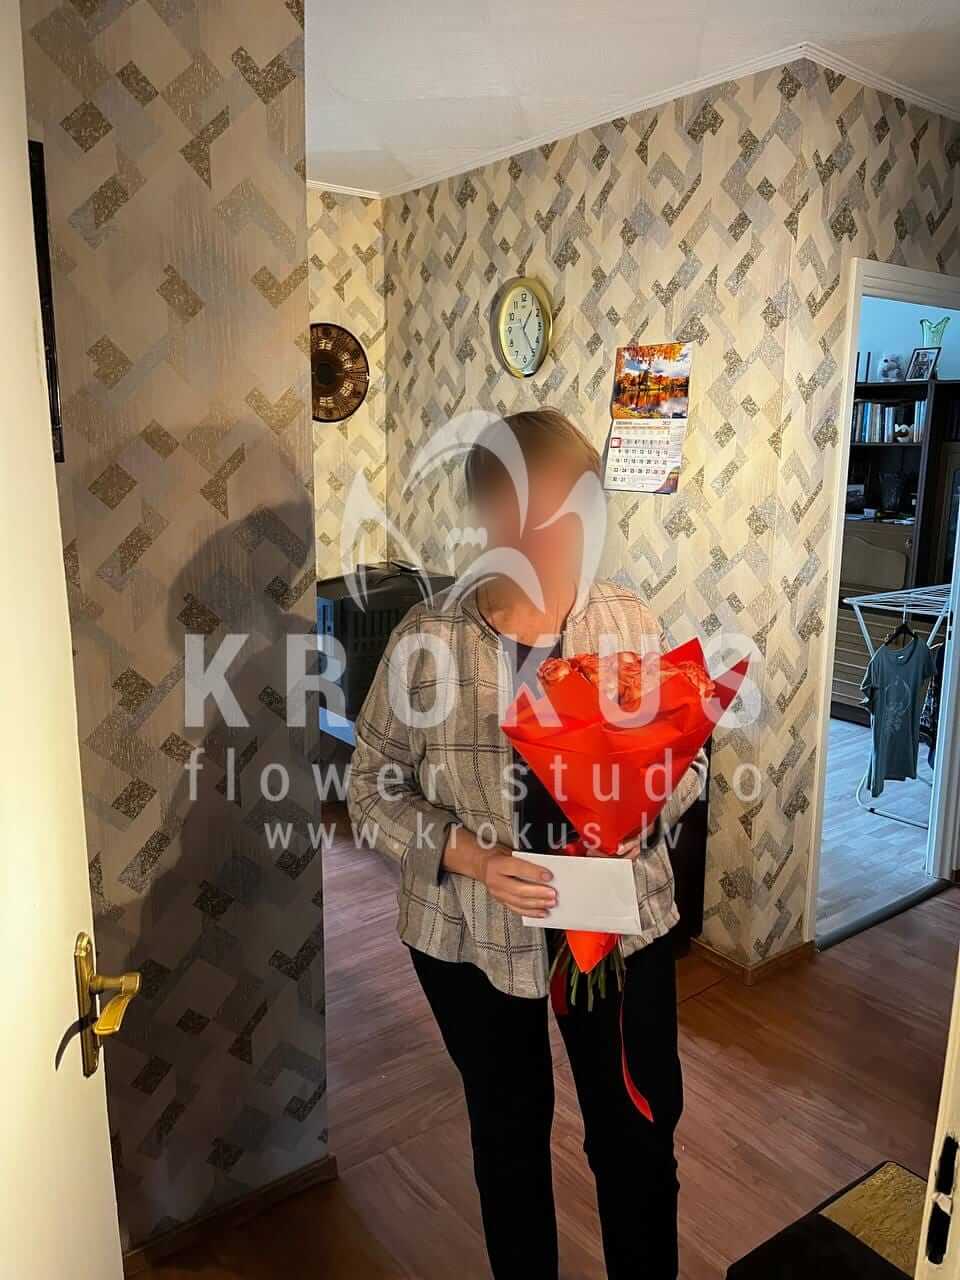 Deliver flowers to Rīga (bicolor roses)